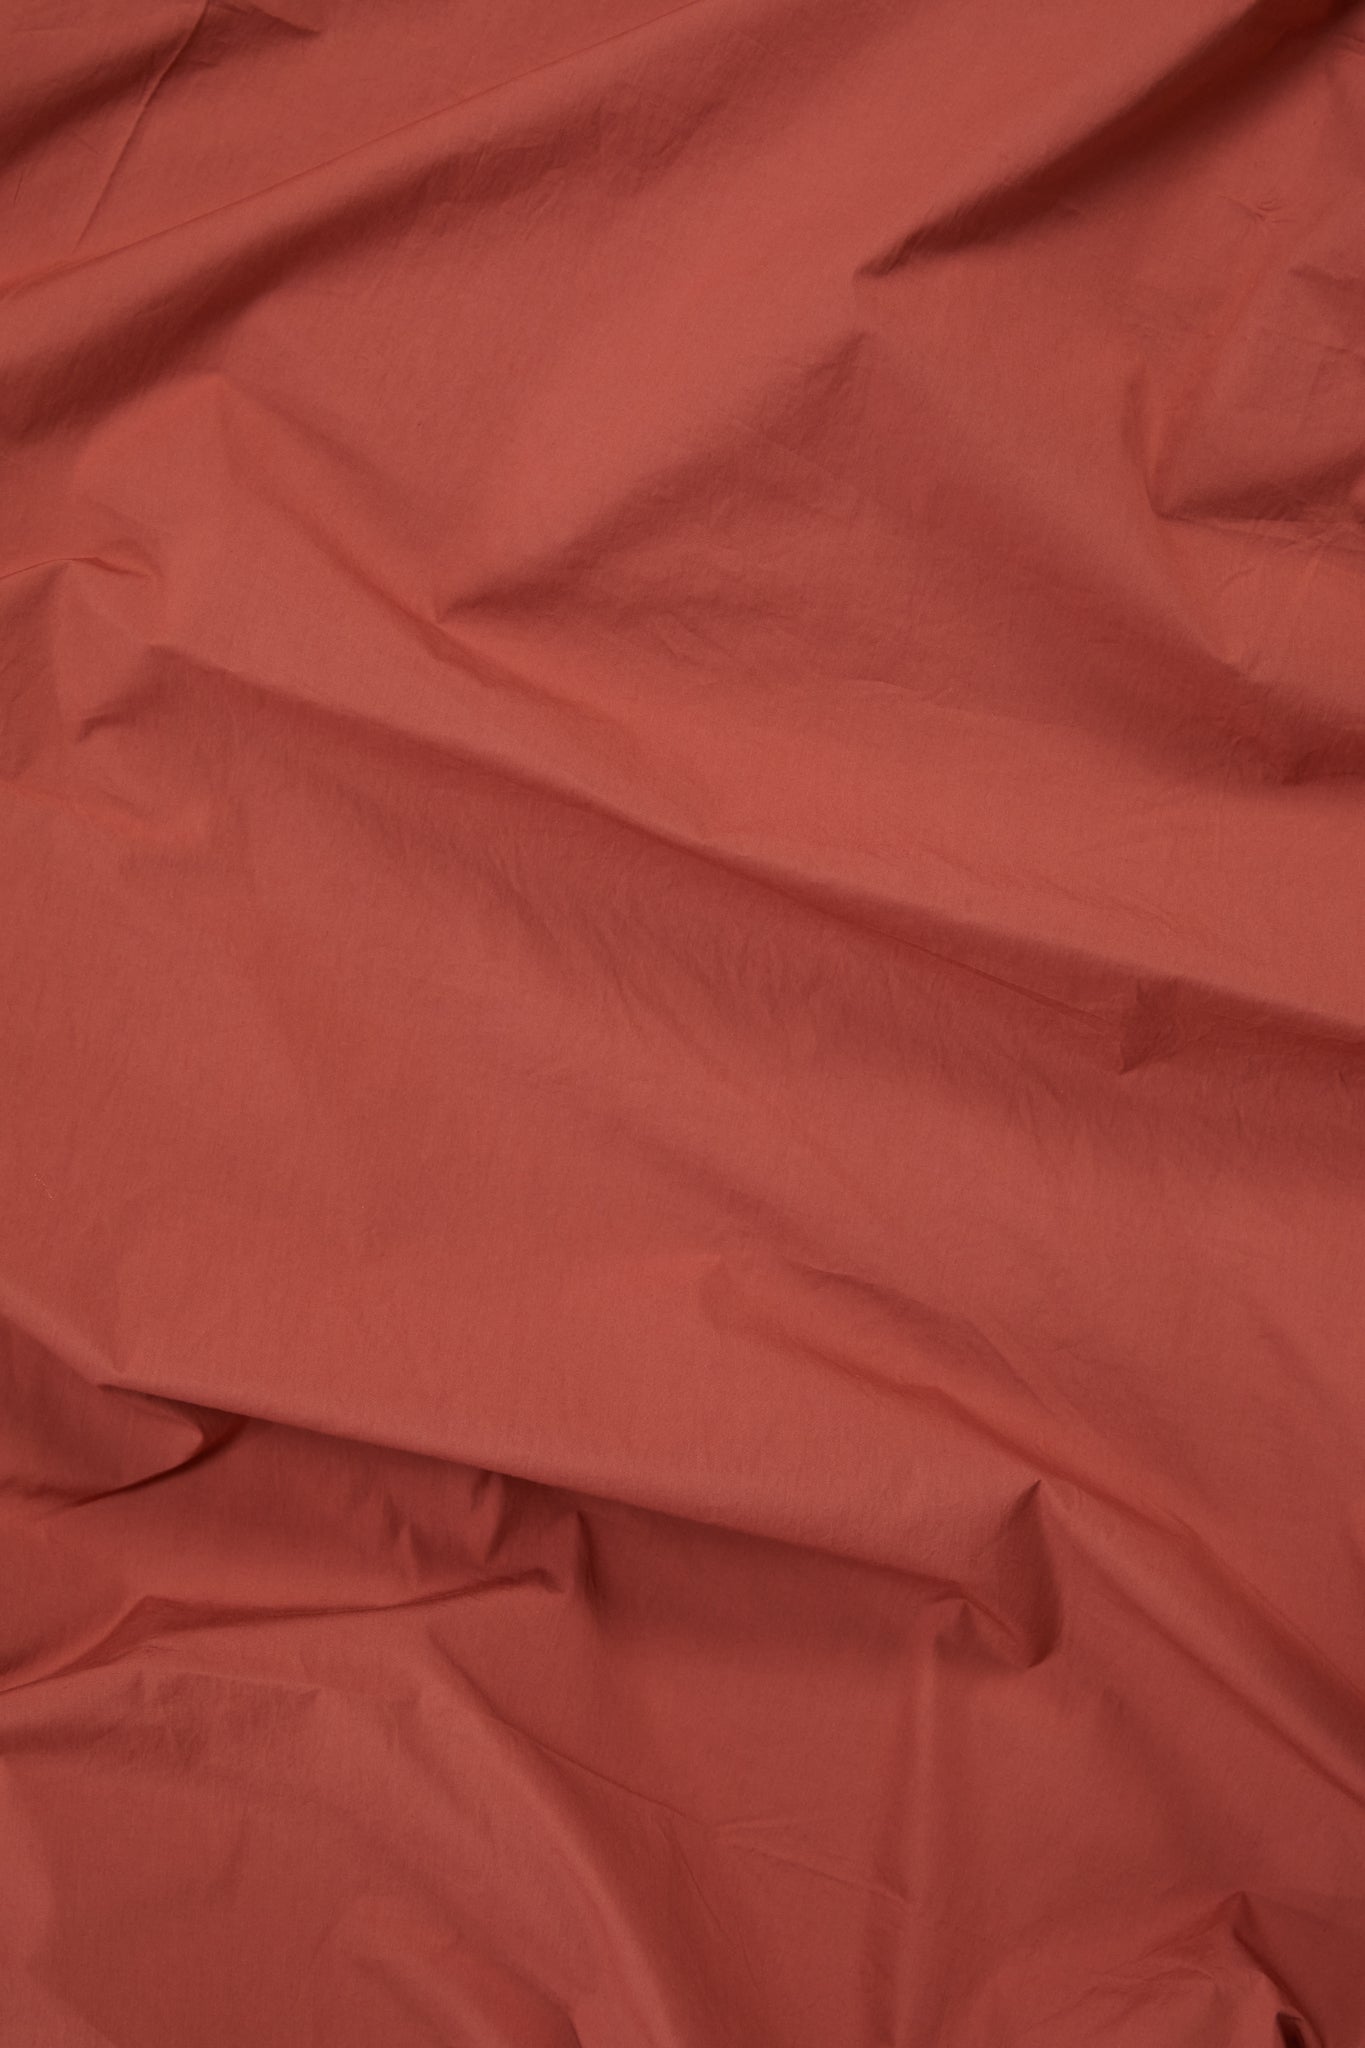 Pillowcase Pair in Ochre Red